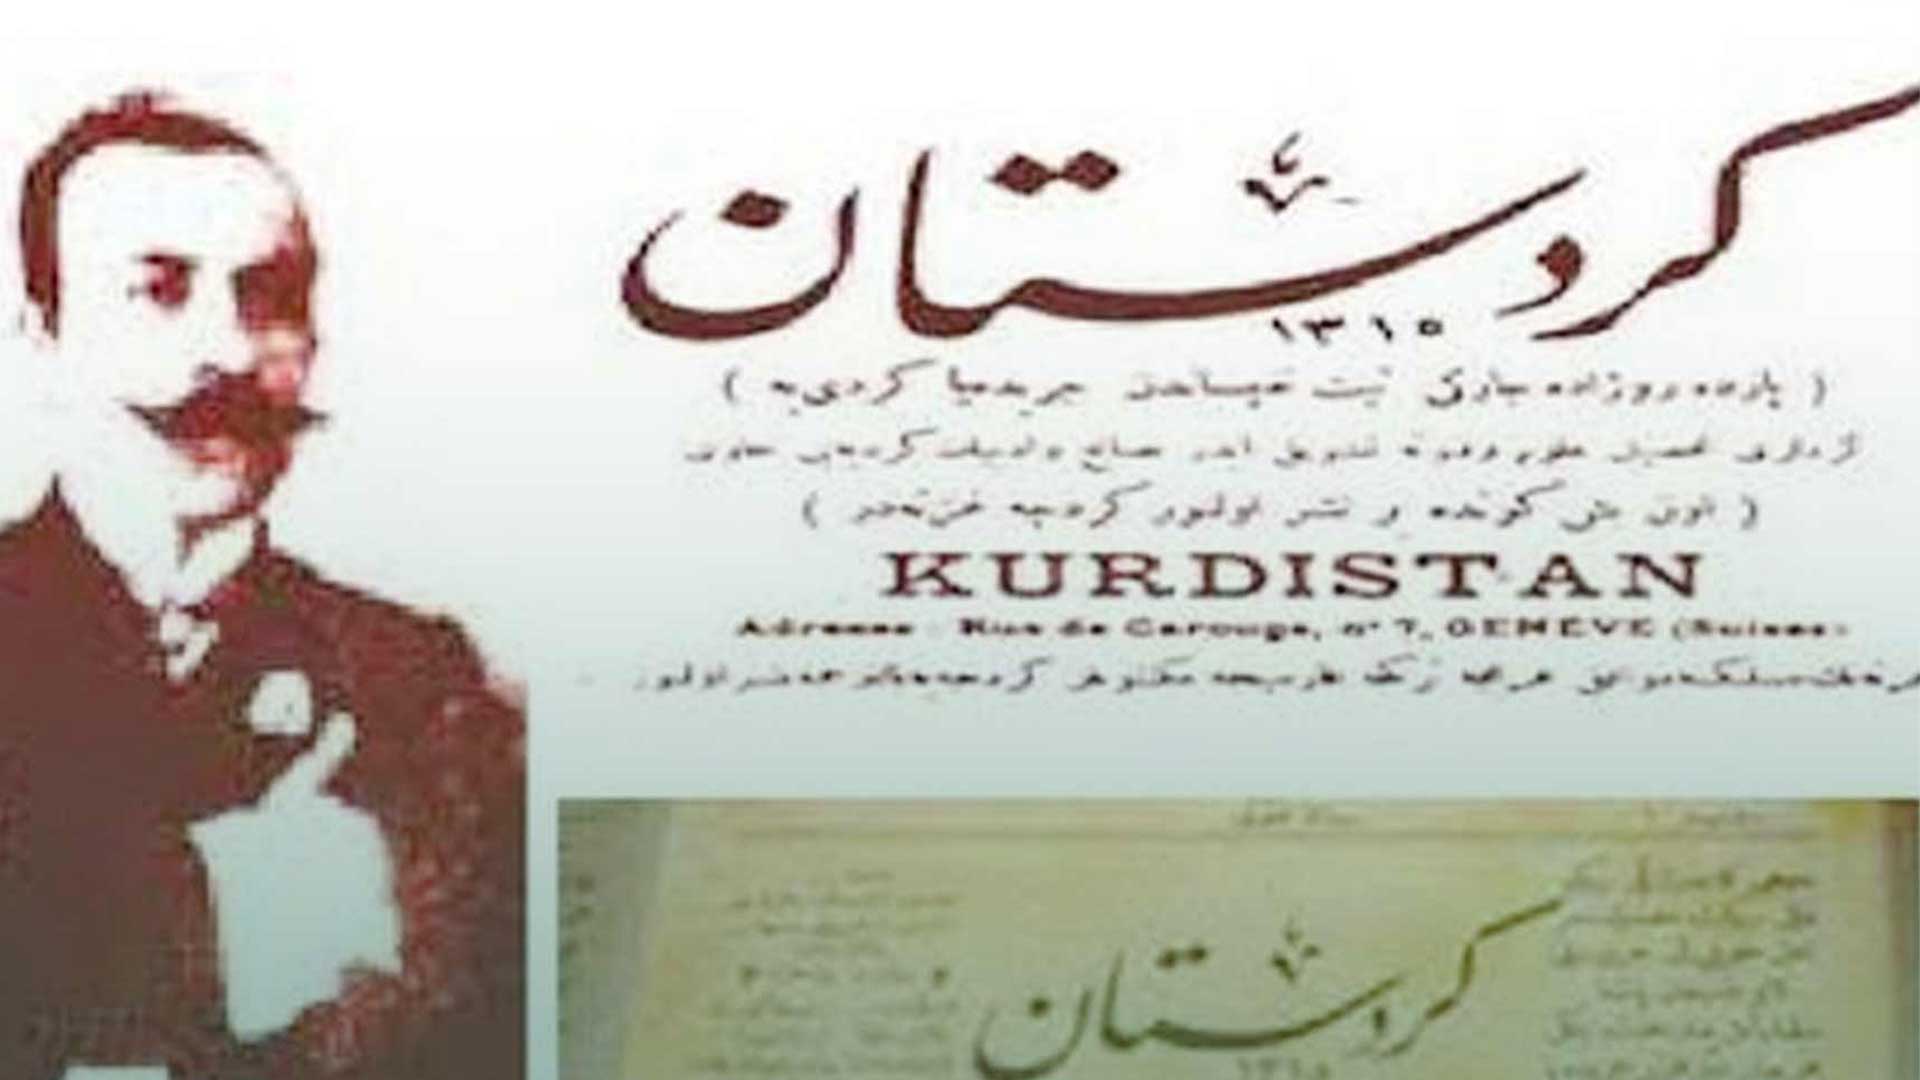  Kurdistan Newspaper and Miqdad Medhat Badrkhan.